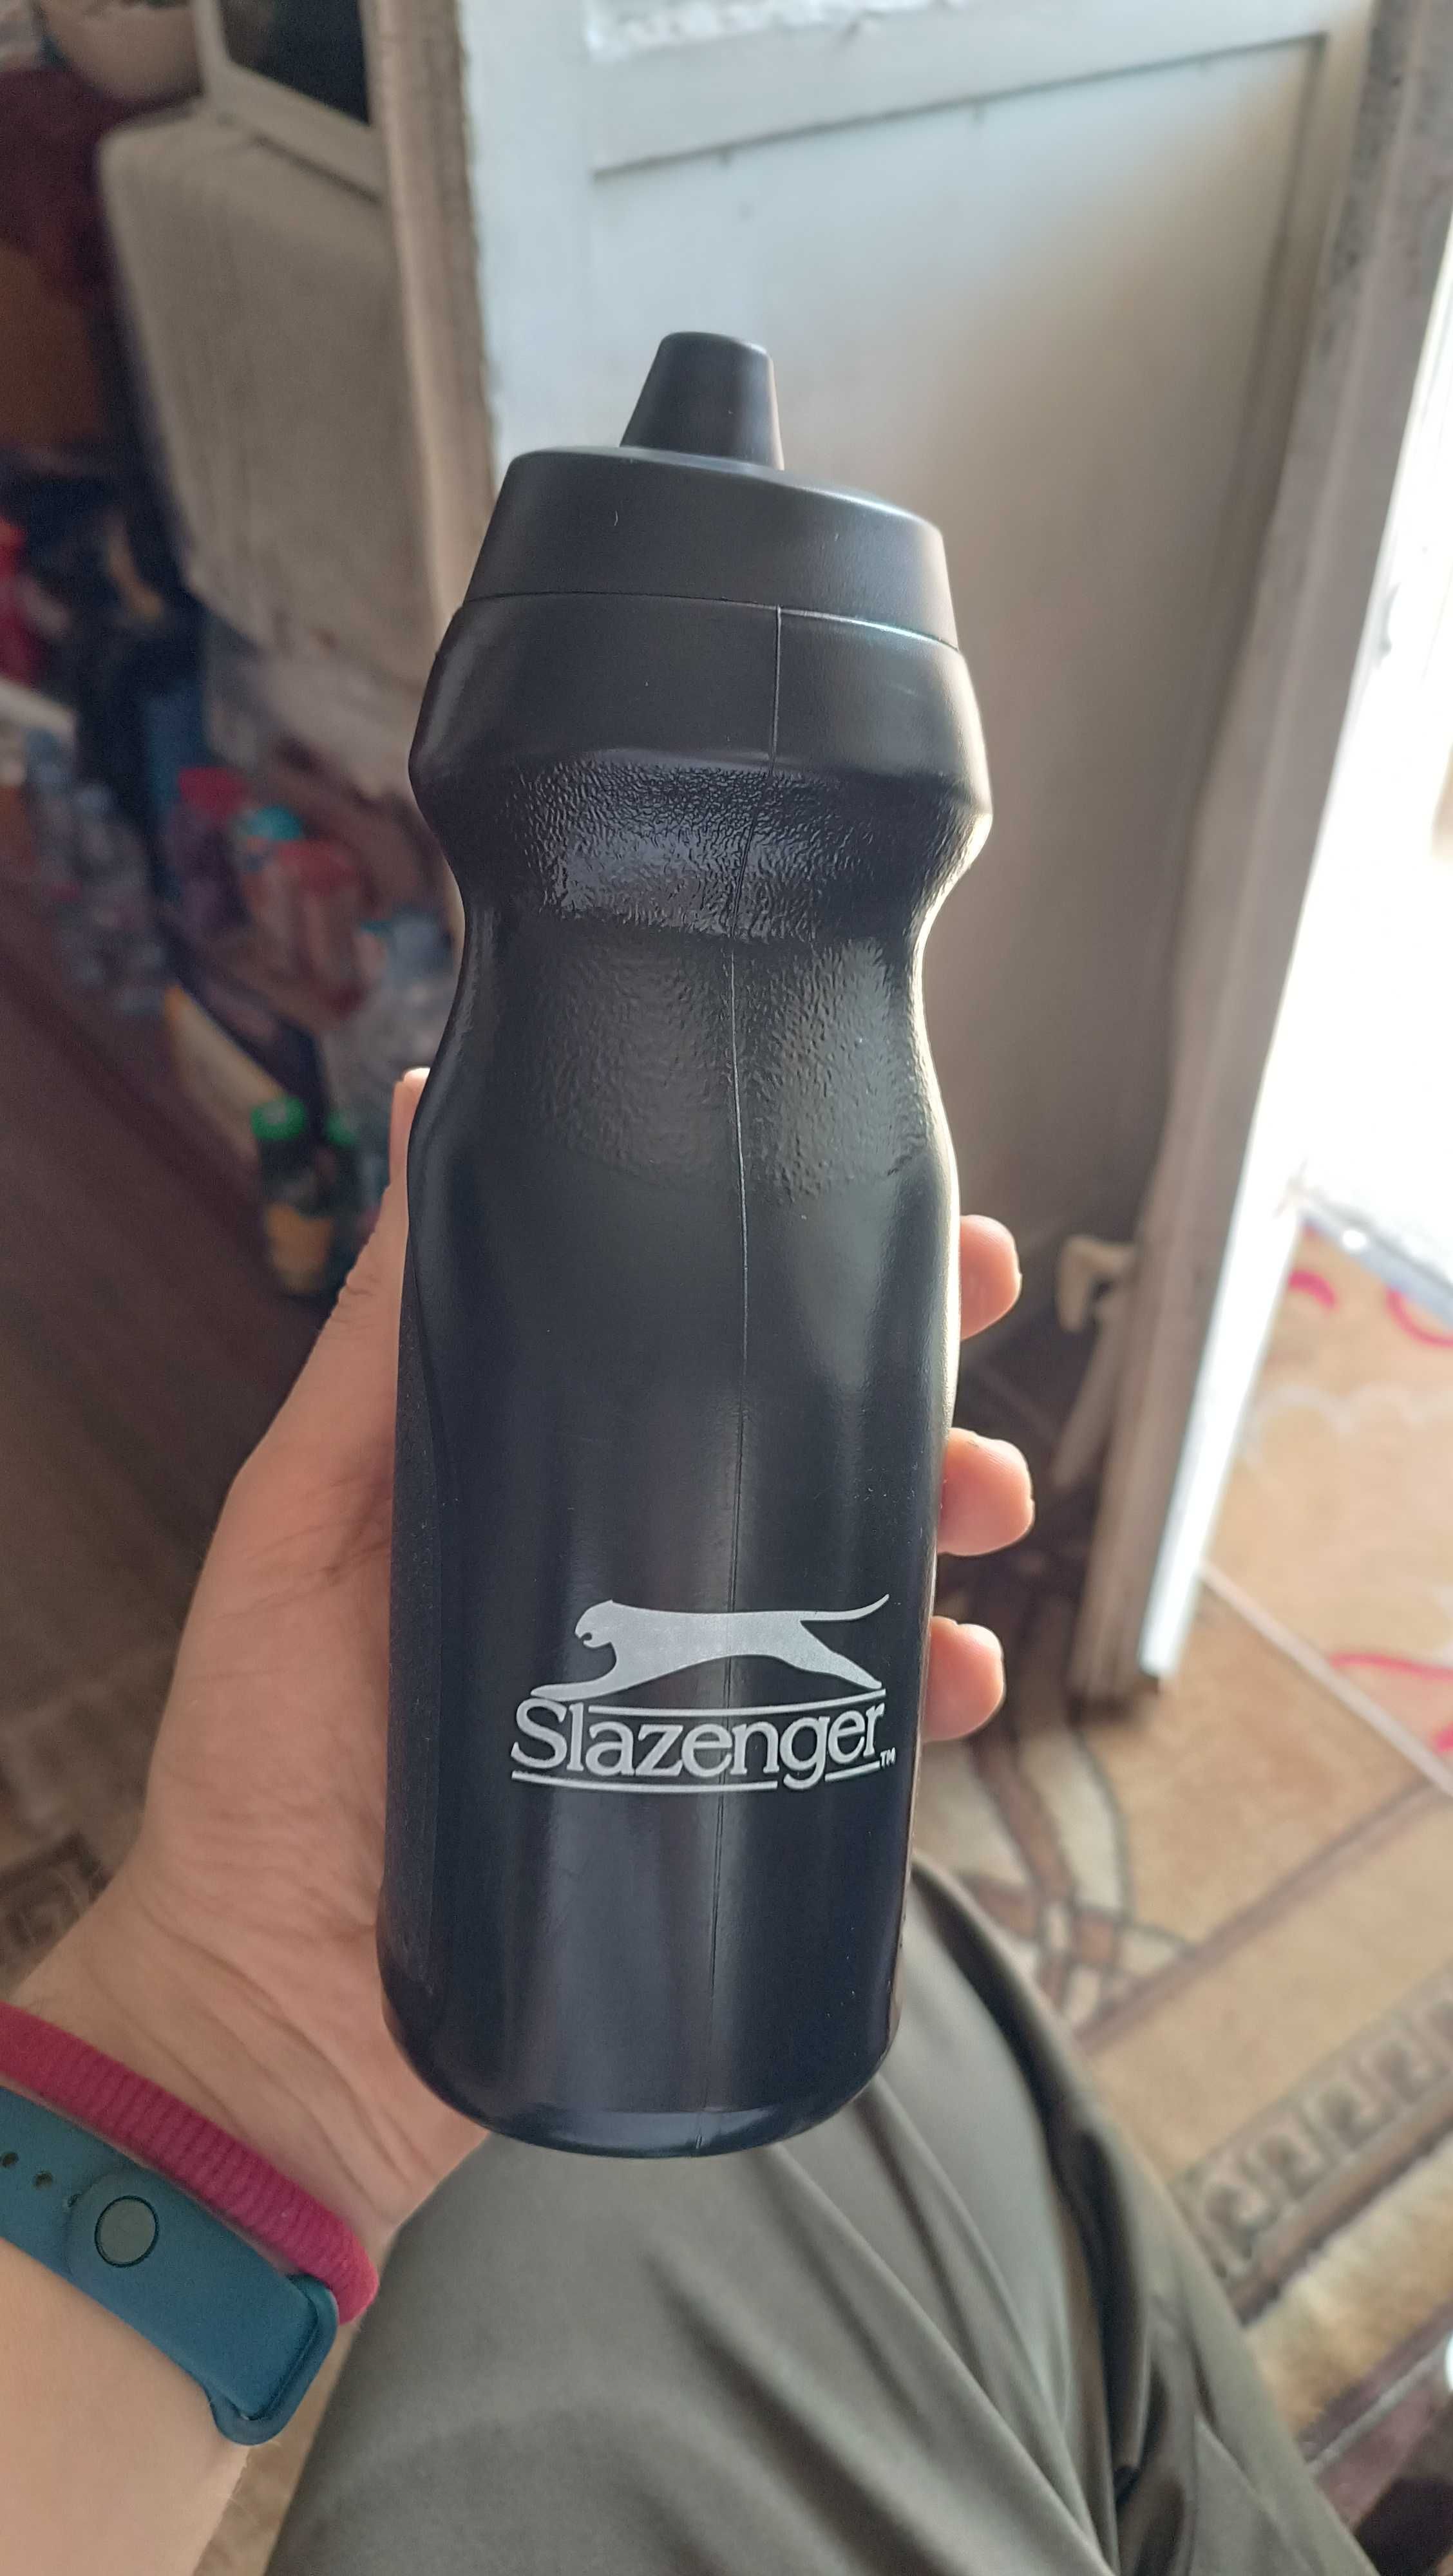 Продавам бутилка за вода за велосипед PVC - Slazenger - нова е !